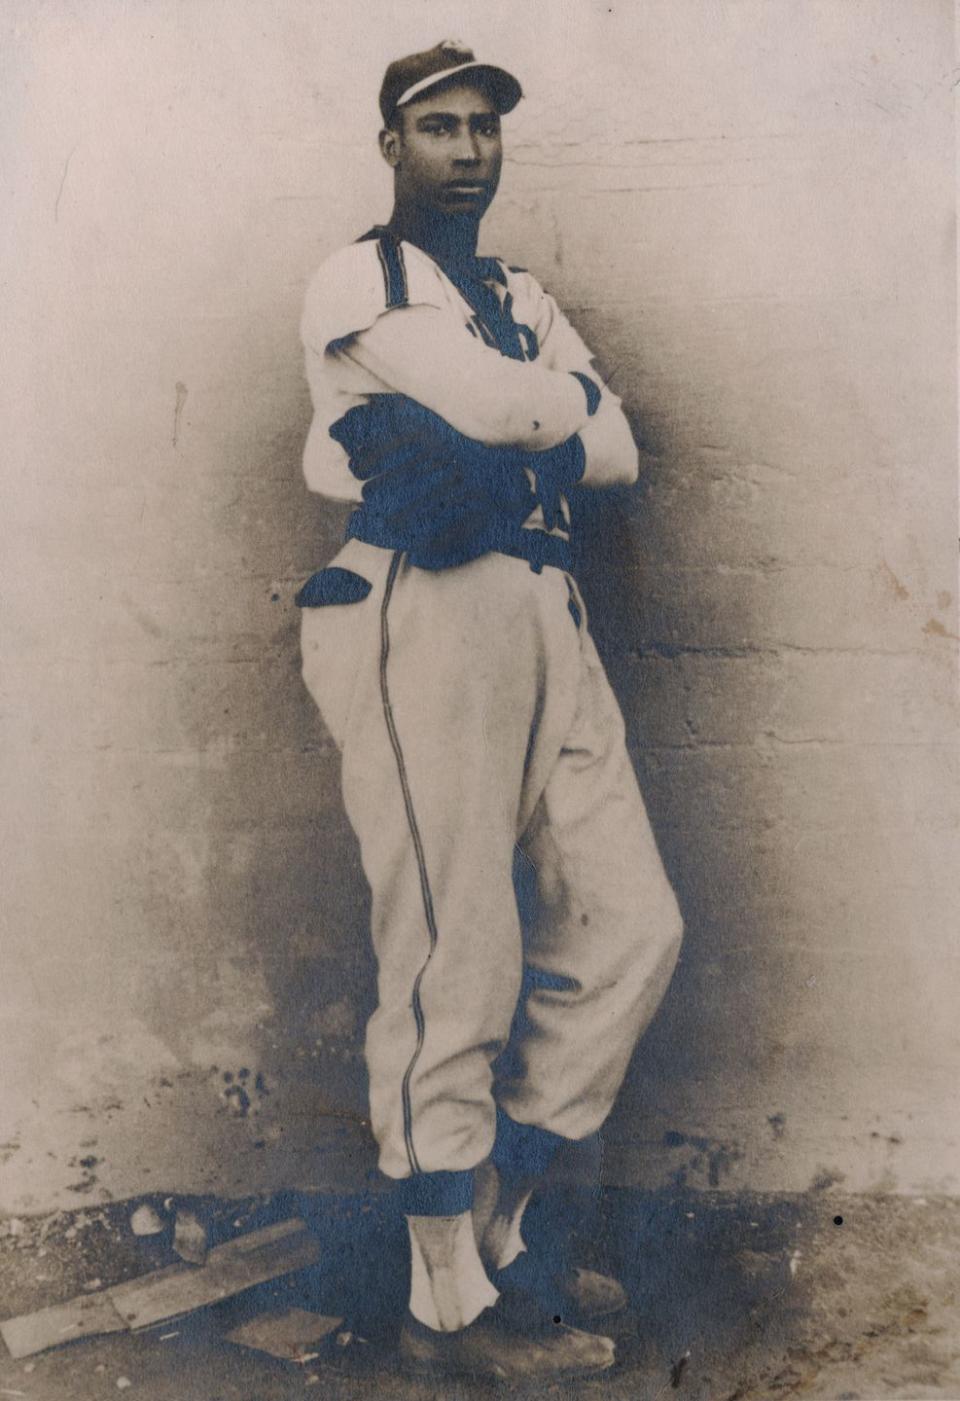 martin dihigo leaning against a wall with a baseball glove